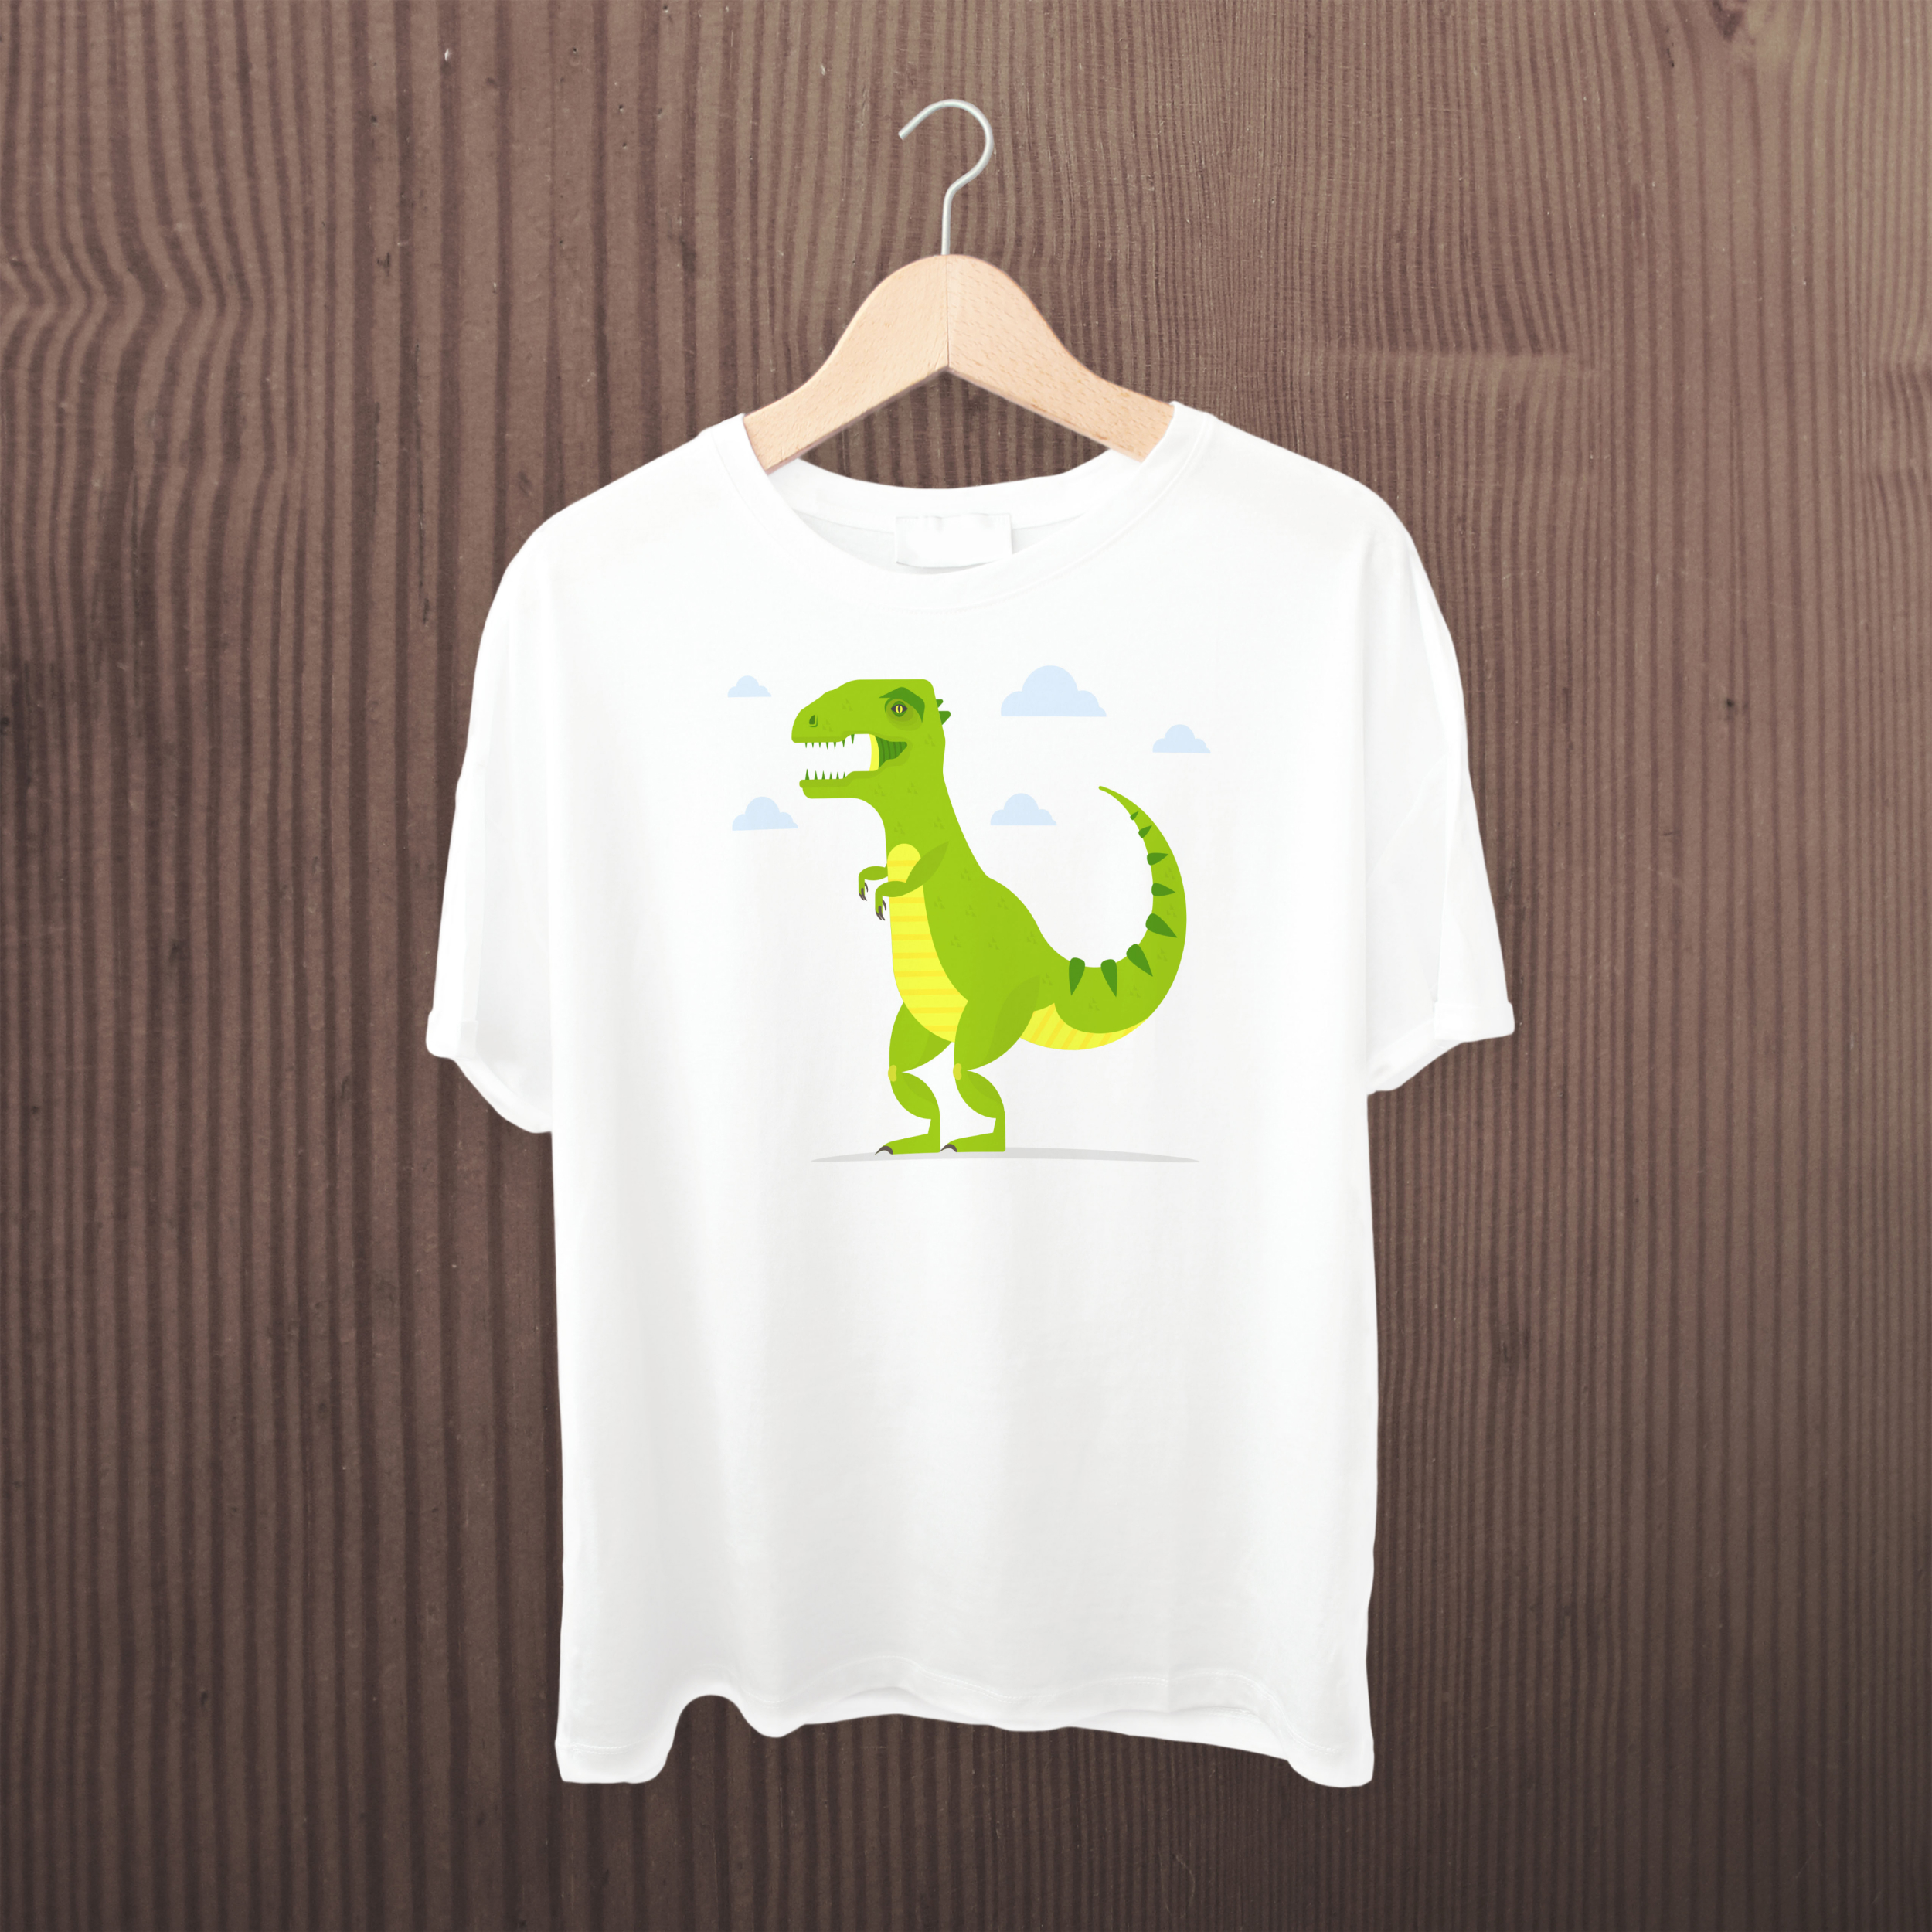 tyrannosaurus rex t rex t shirt designs bundle 04 460